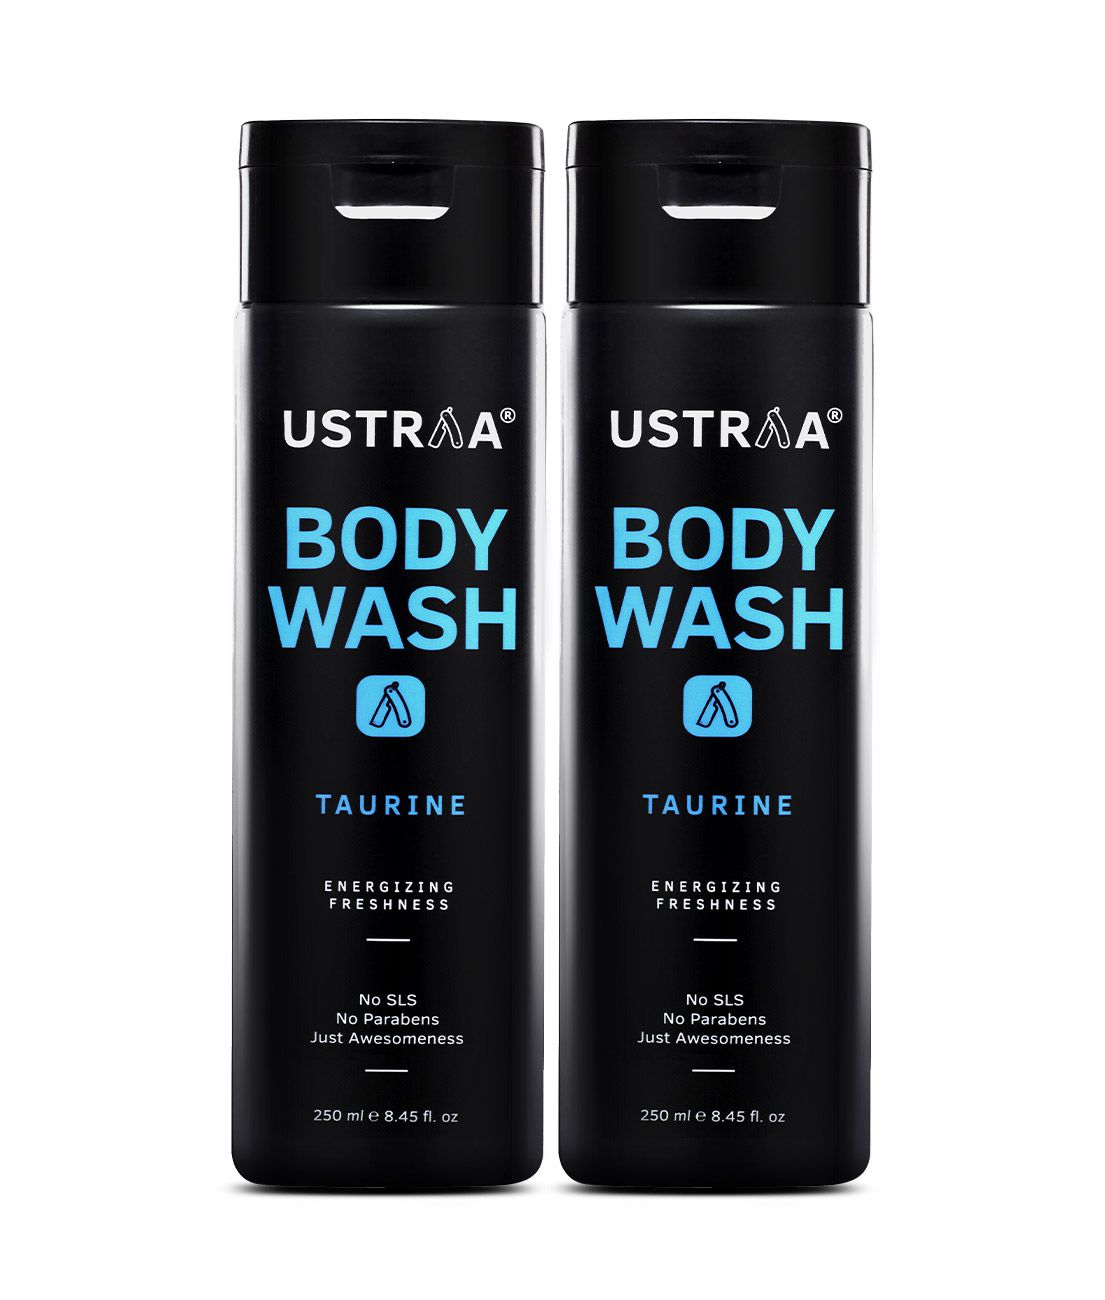     			Ustraa Body Wash-Taurine - 500ml (Pack of 2)